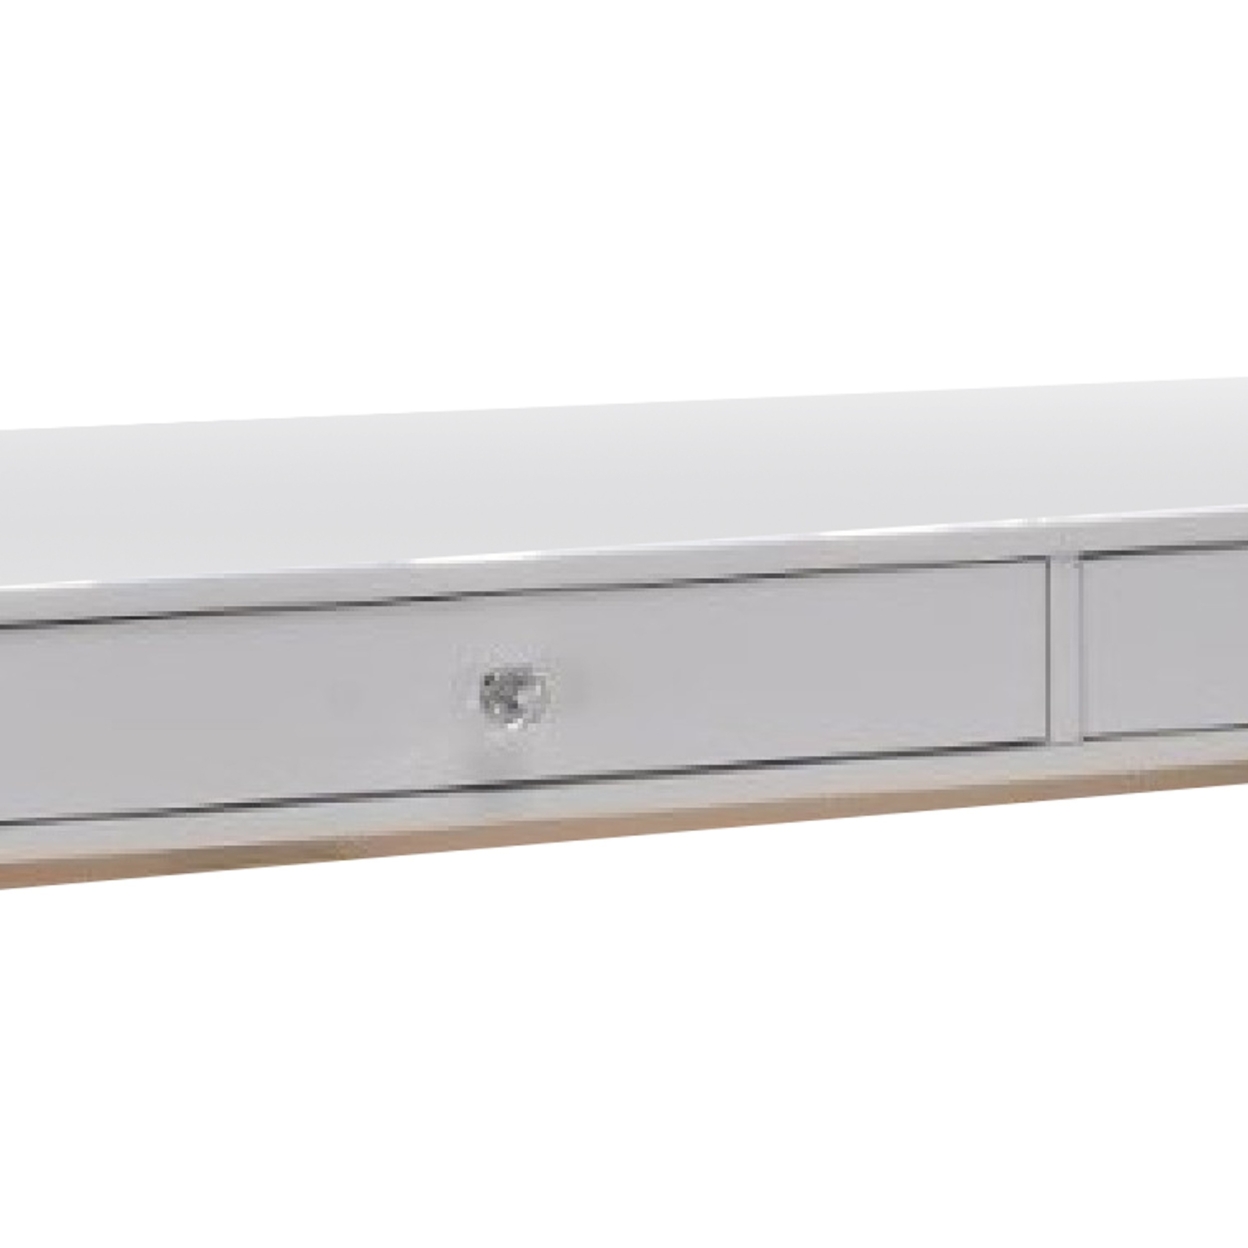 47 Inch Desk Console Table, 2 Drawers, Metal Frame, White, Gold- Saltoro Sherpi